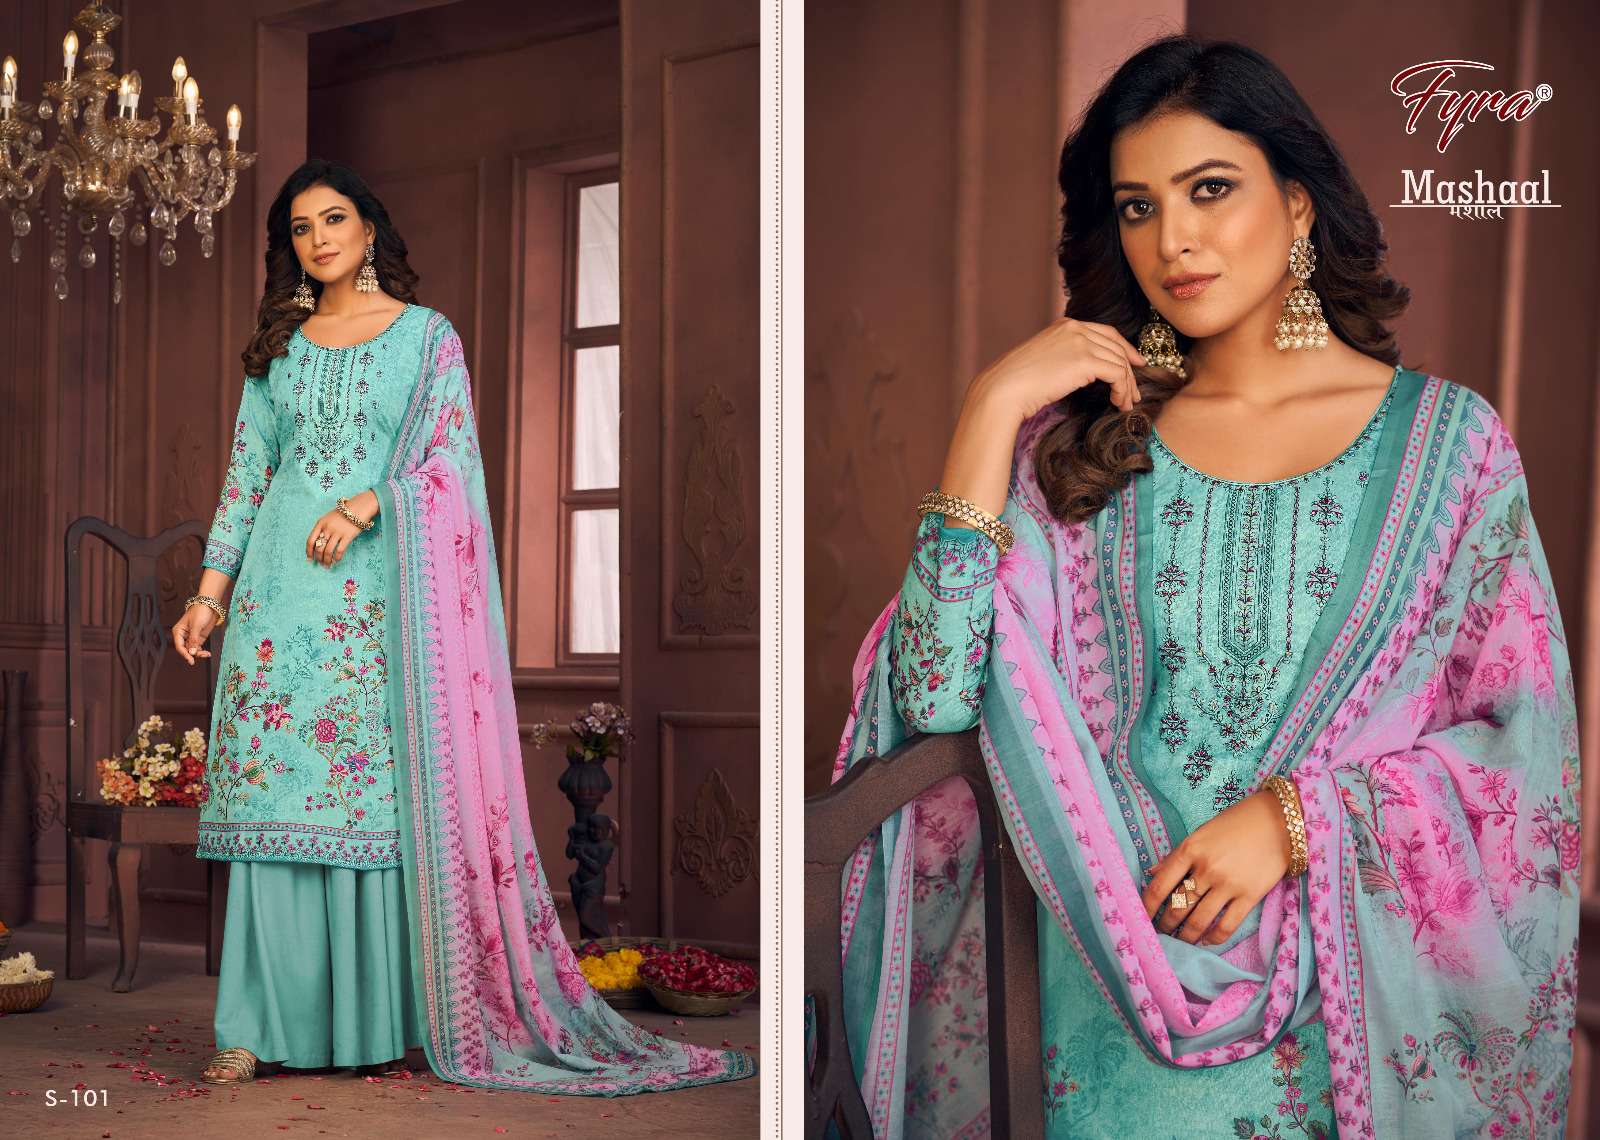 fyra designing alok suit mashaal cambric cotton catchy look salwar suit catalog